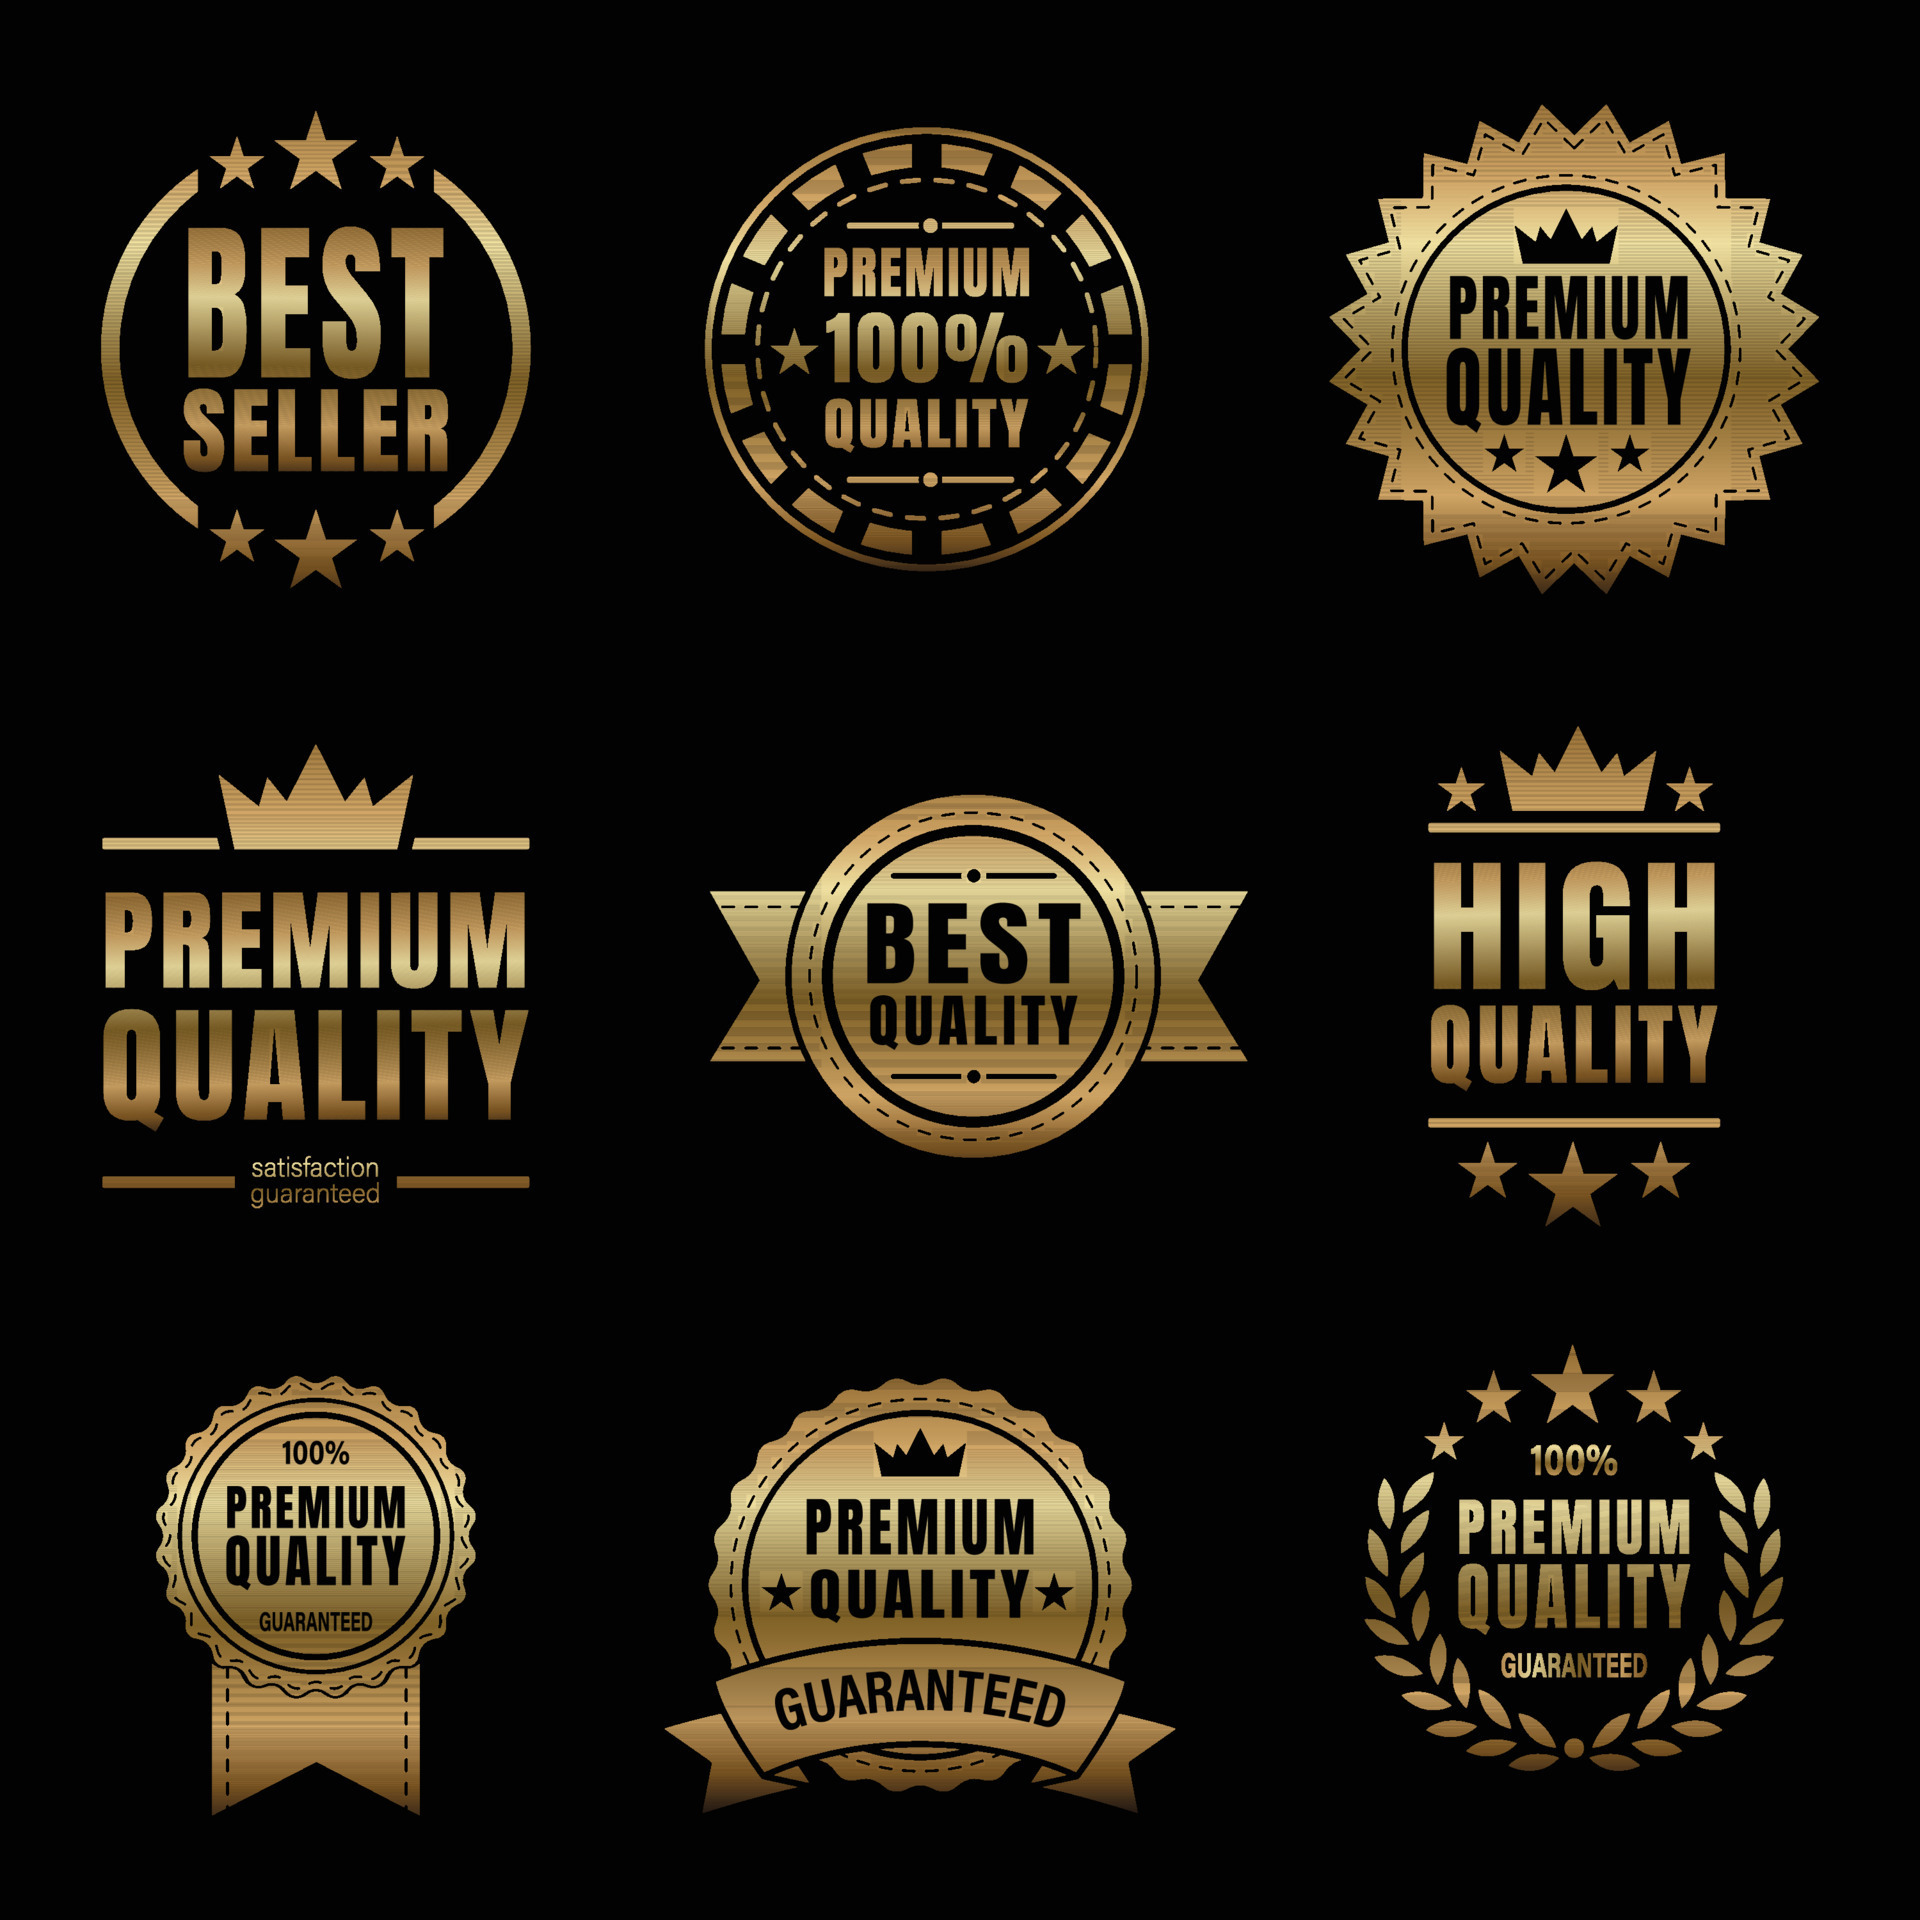 https://static.vecteezy.com/system/resources/previews/021/552/446/original/set-of-golden-best-seller-labels-illustration-for-business-purpose-vector.jpg